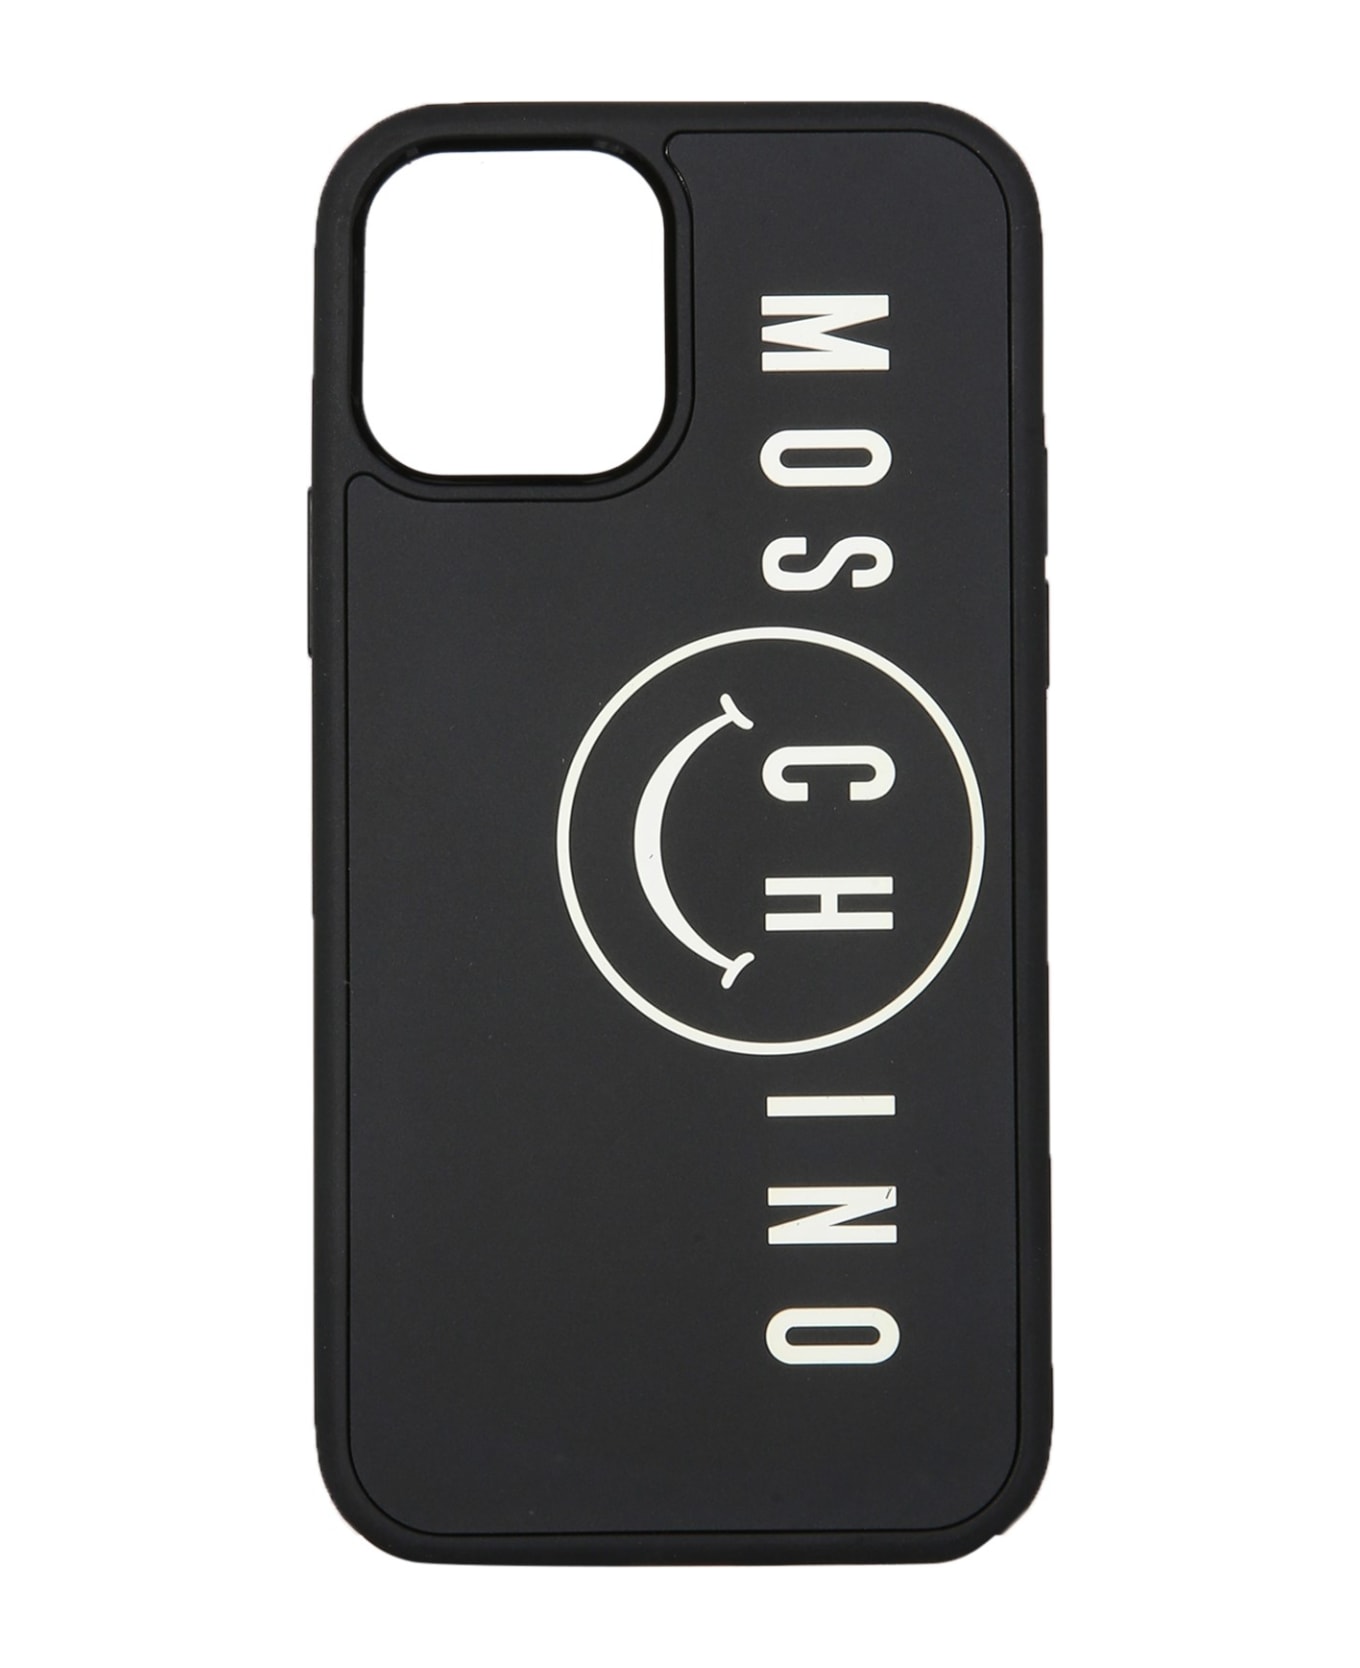 Moschino Iphone 12/12 Pro Cover - NERO